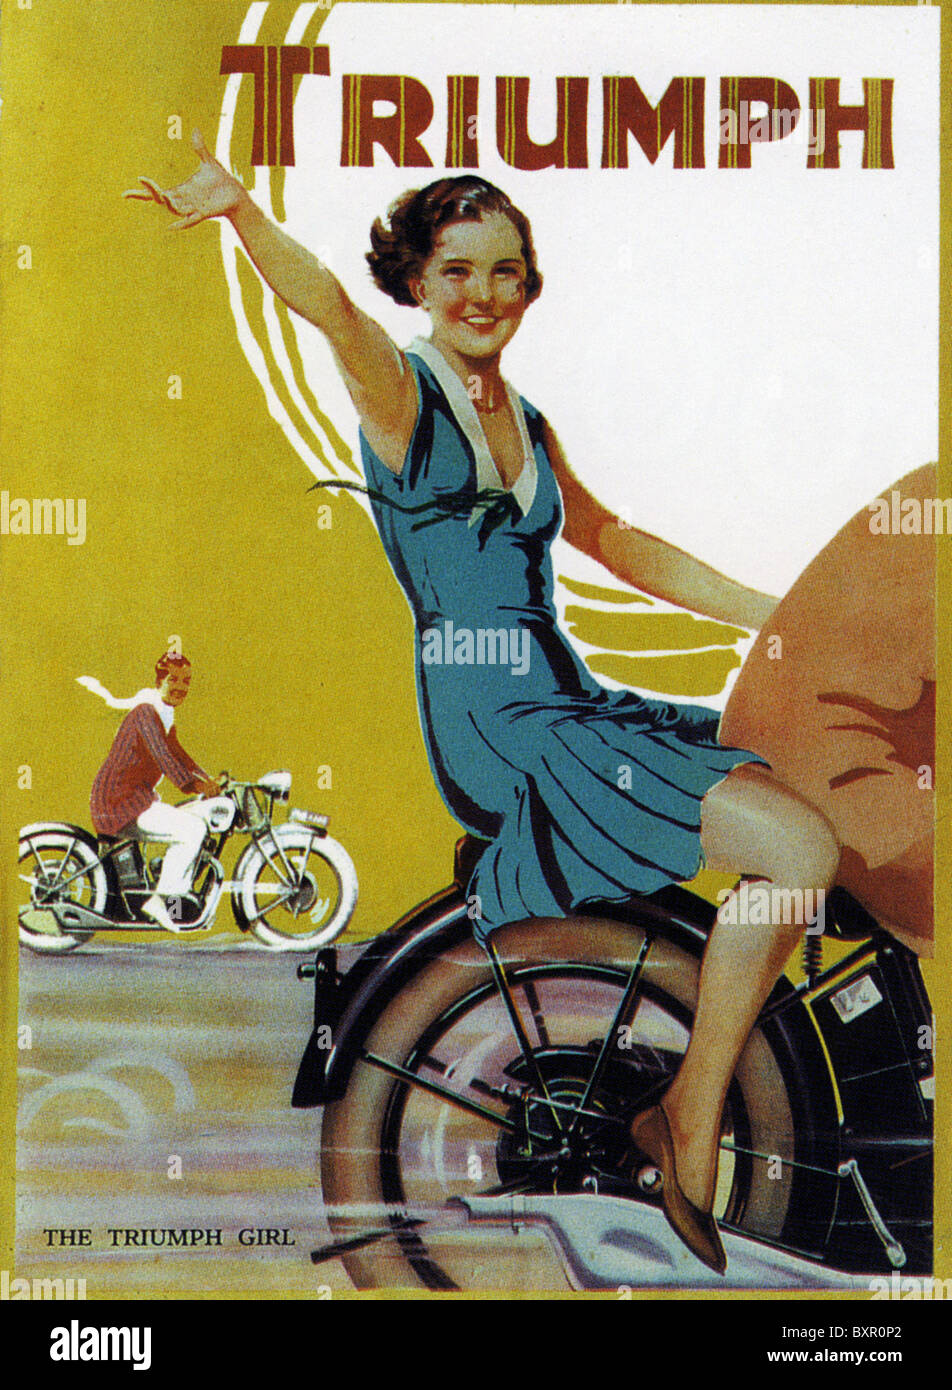 TRIUMPH MOTORCYCLE ADVERT 1931 Stock Photo